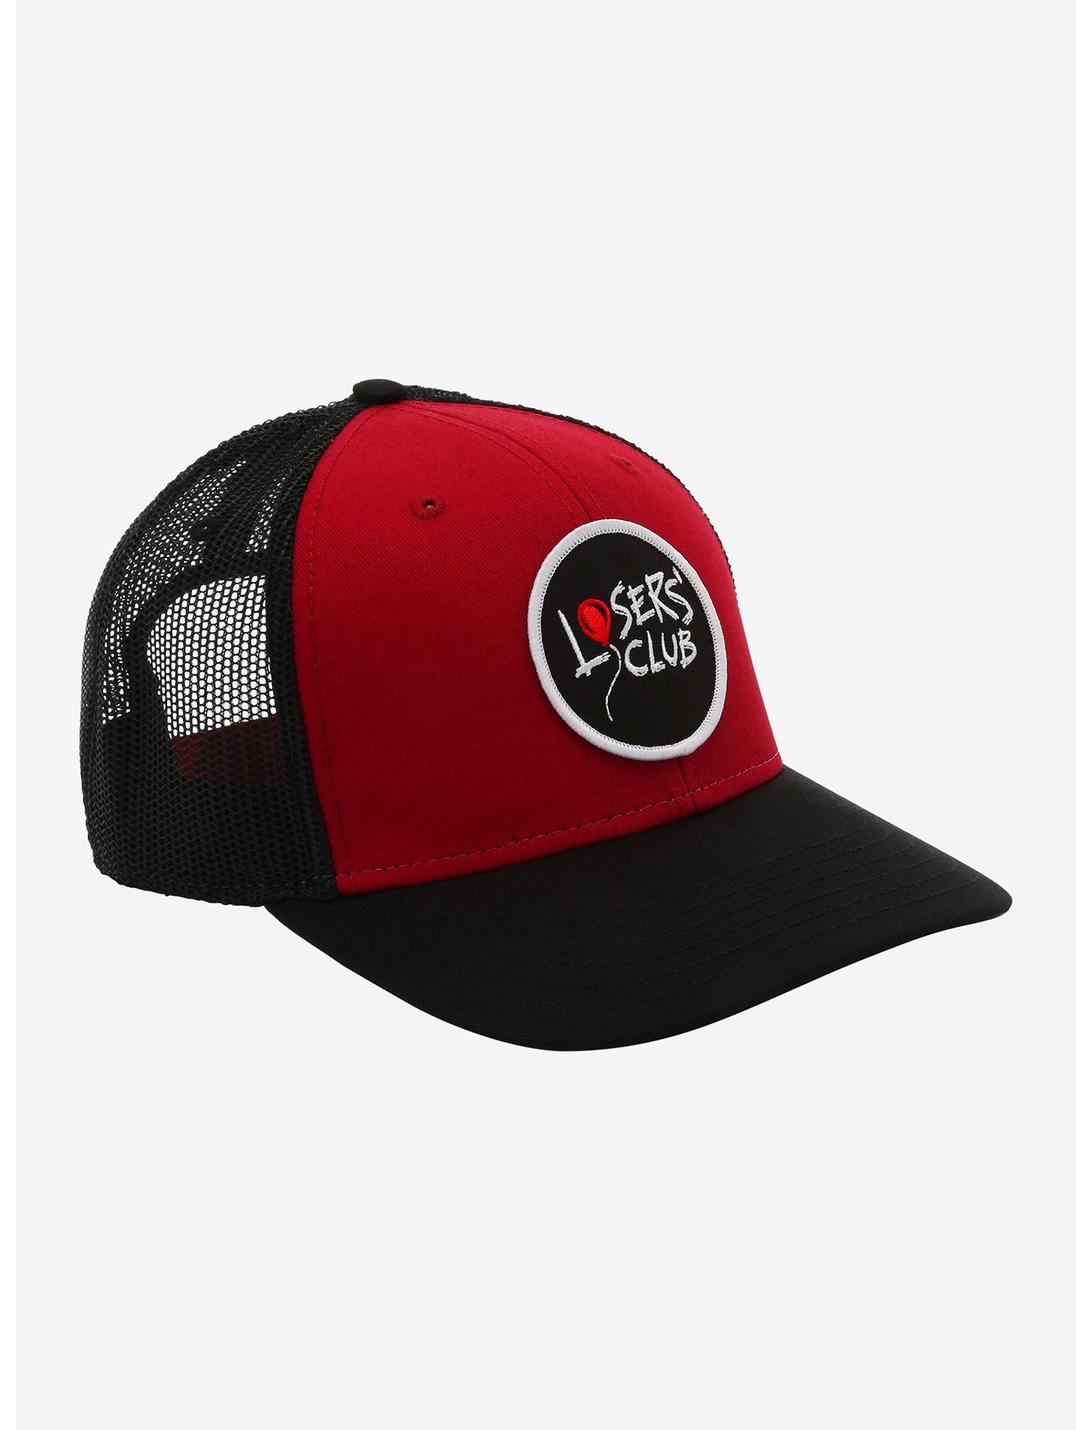 IT Losers Club Trucker Hat, , hi-res